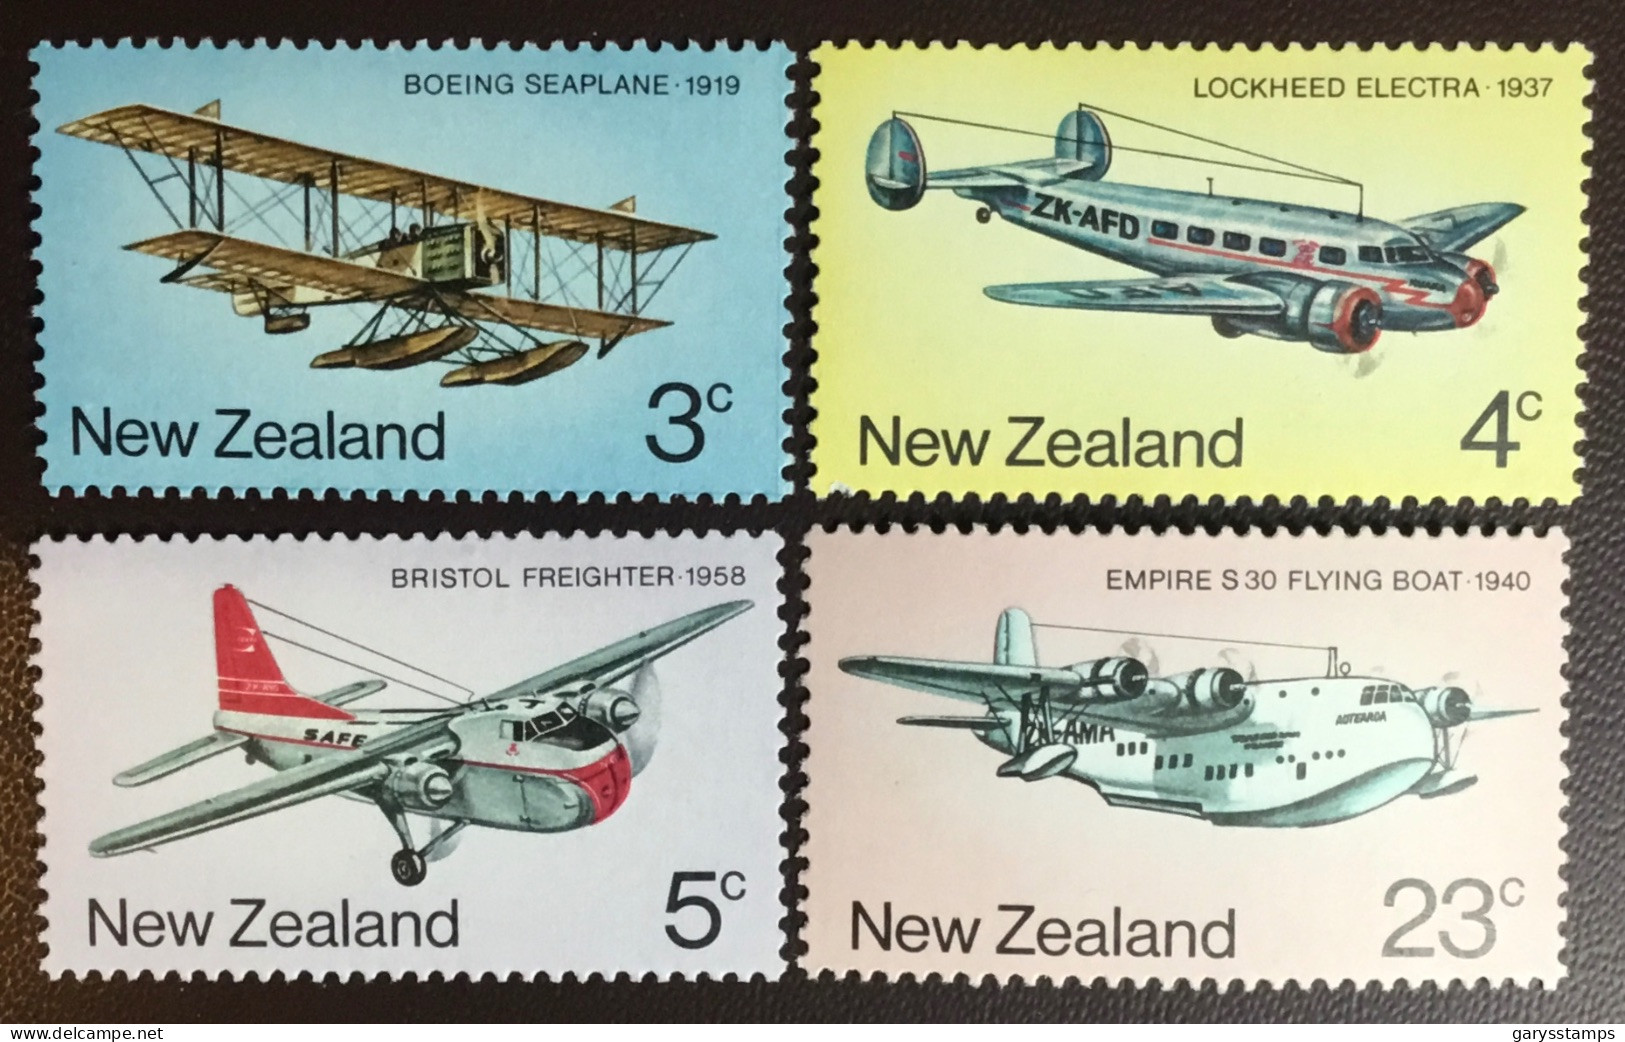 New Zealand 1974 Airplanes Aircraft MNH - Neufs